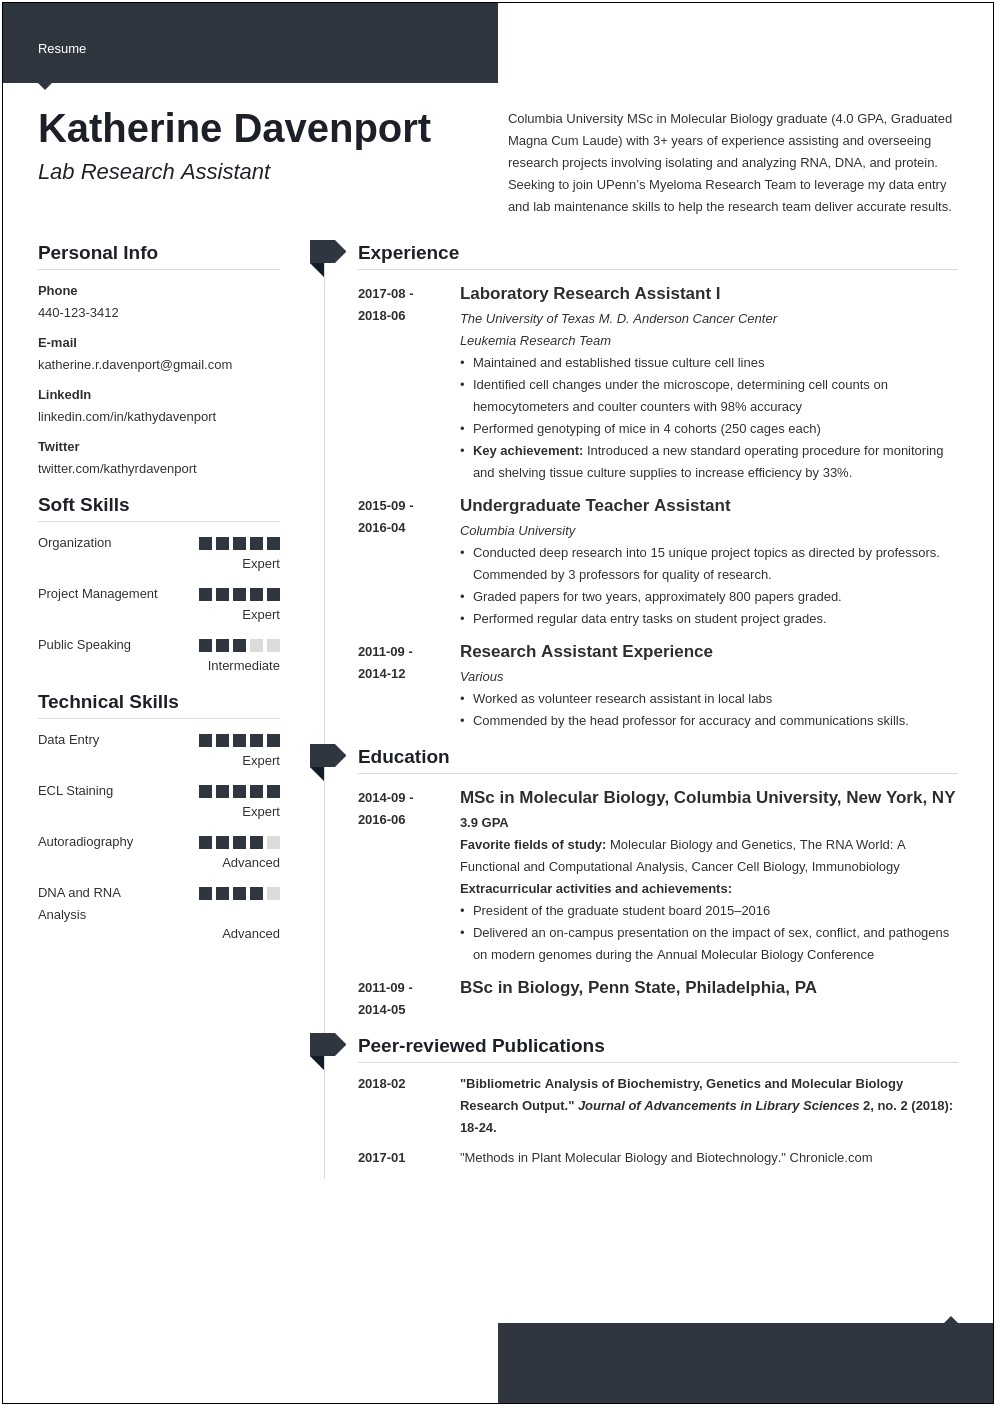 Sample Resume Of An Undergraduate Biochemistry Major